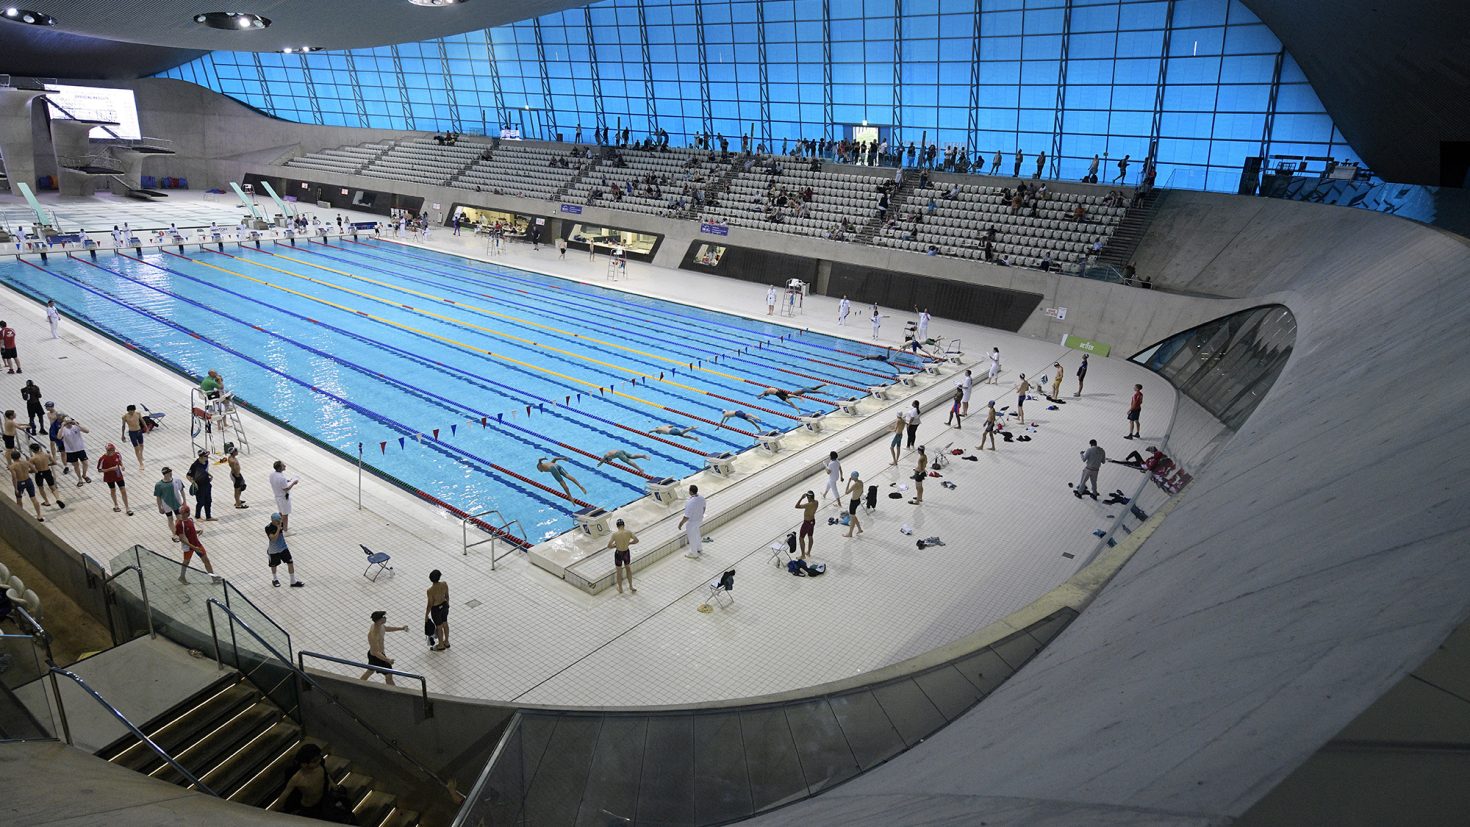 London Aquatics Centre Competition Pool